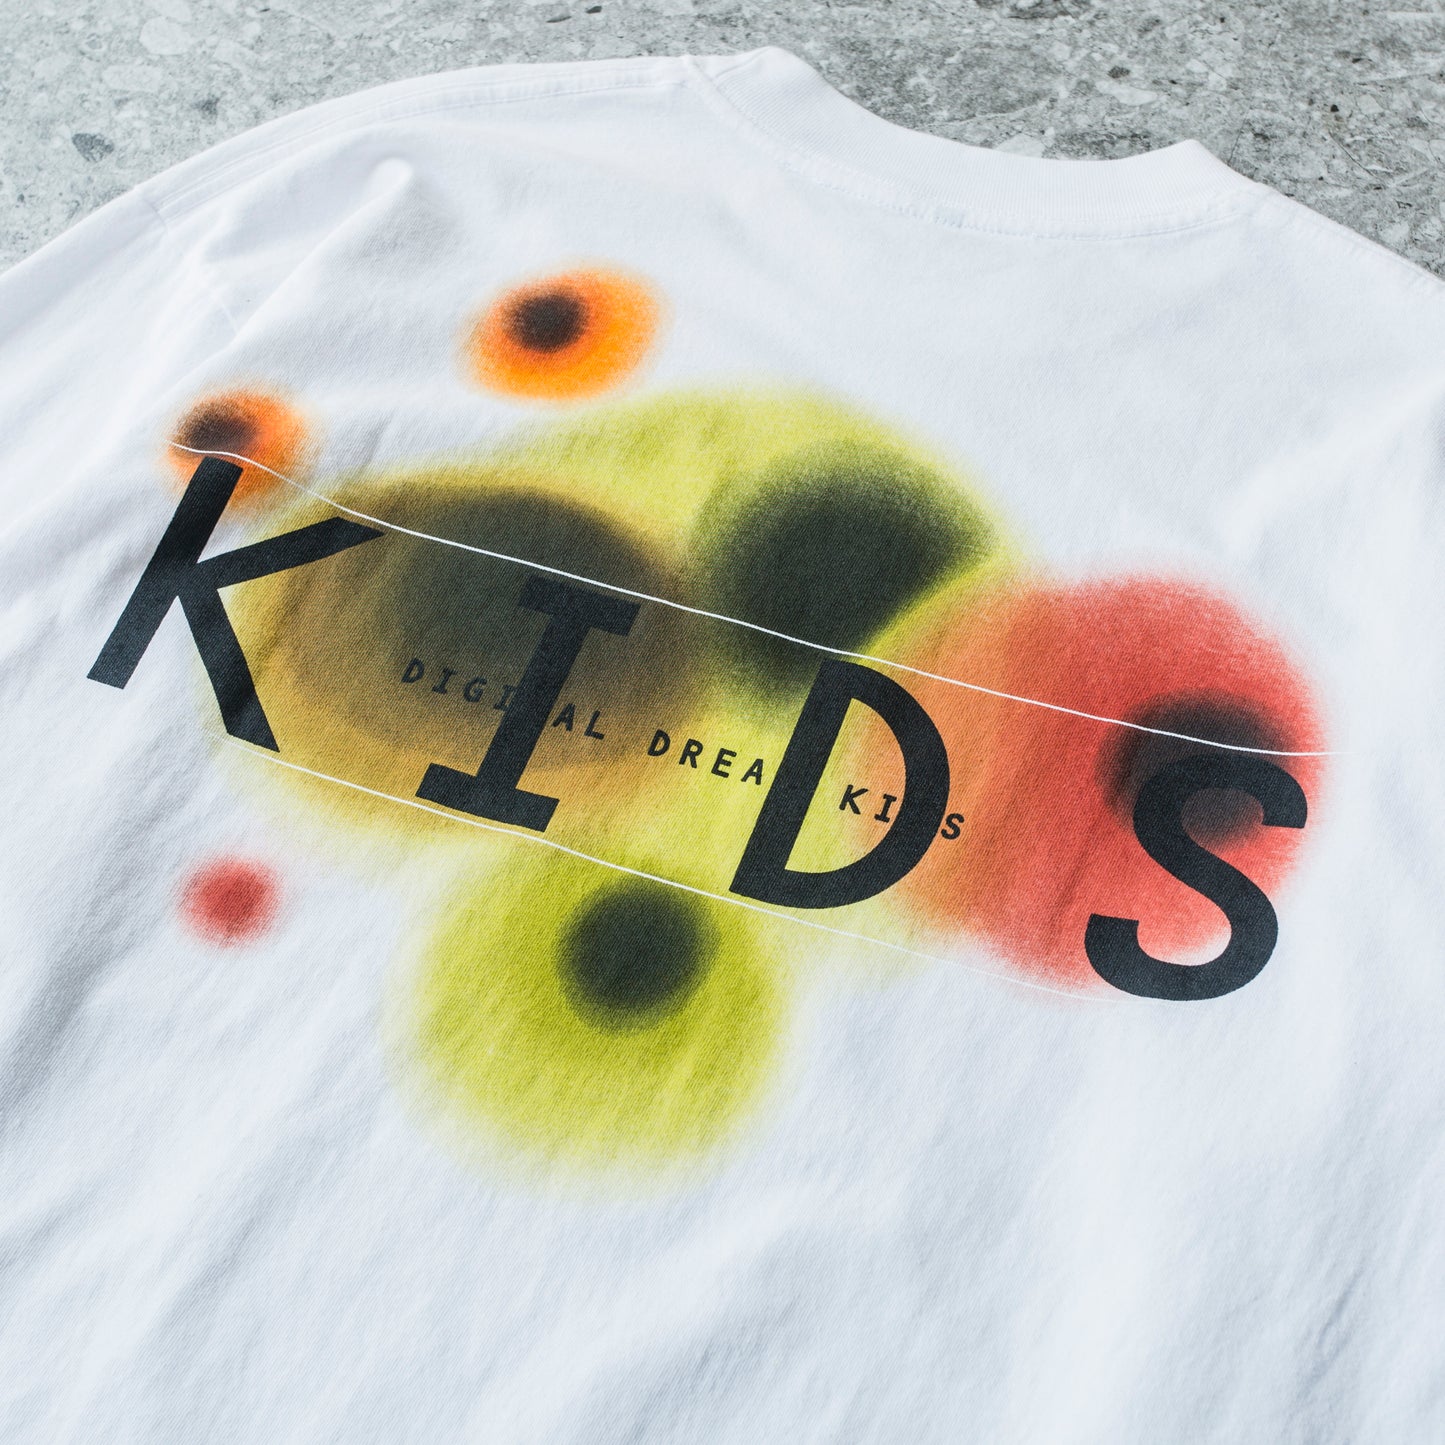 Digital Dream Kids Ls Shirt